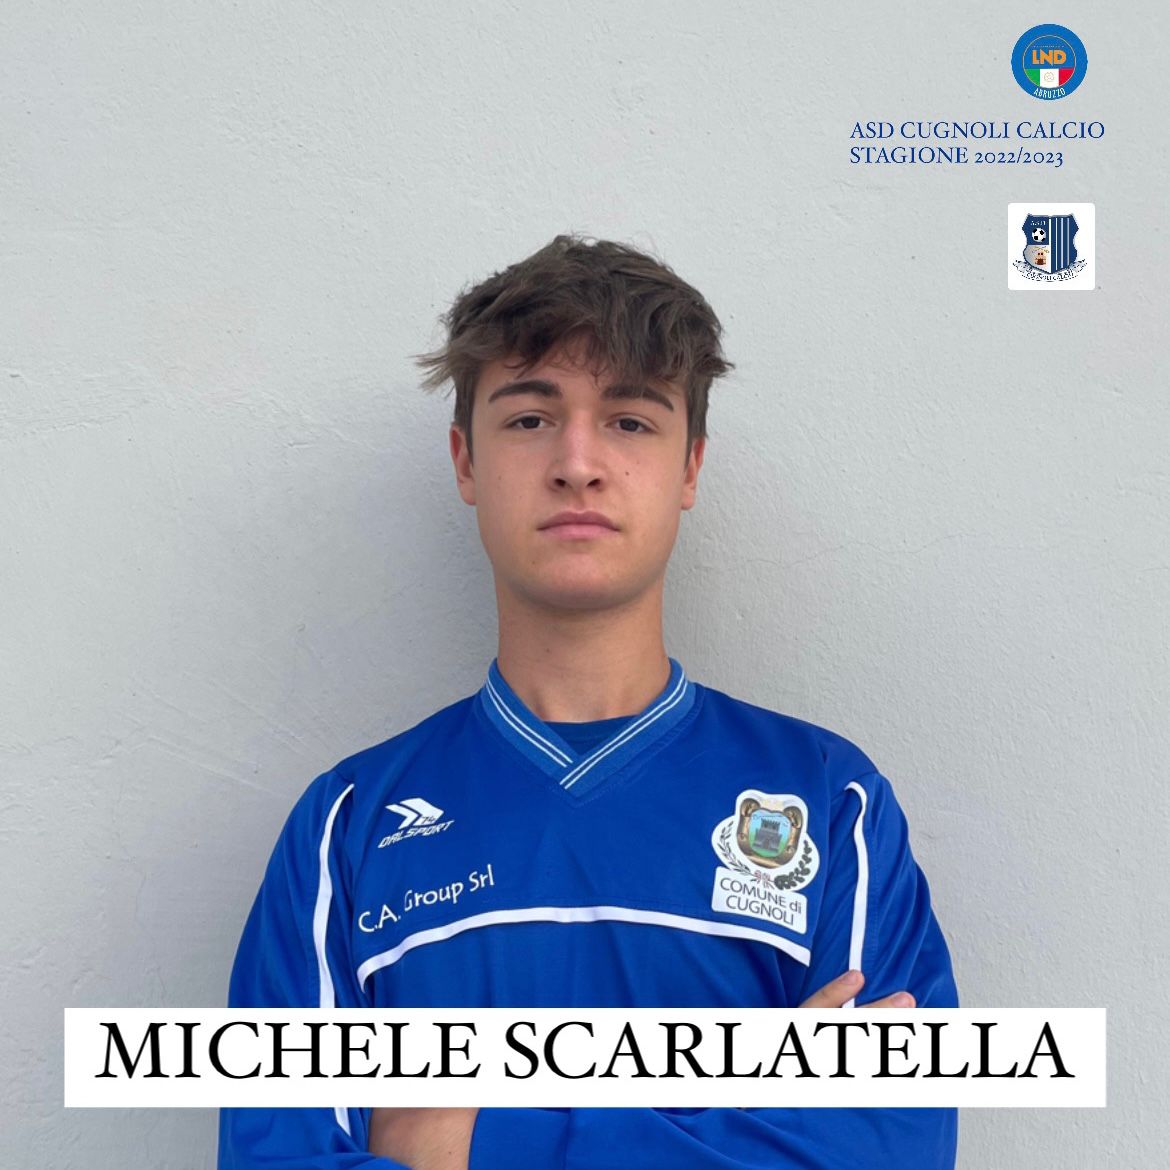 Michele Scarlatella